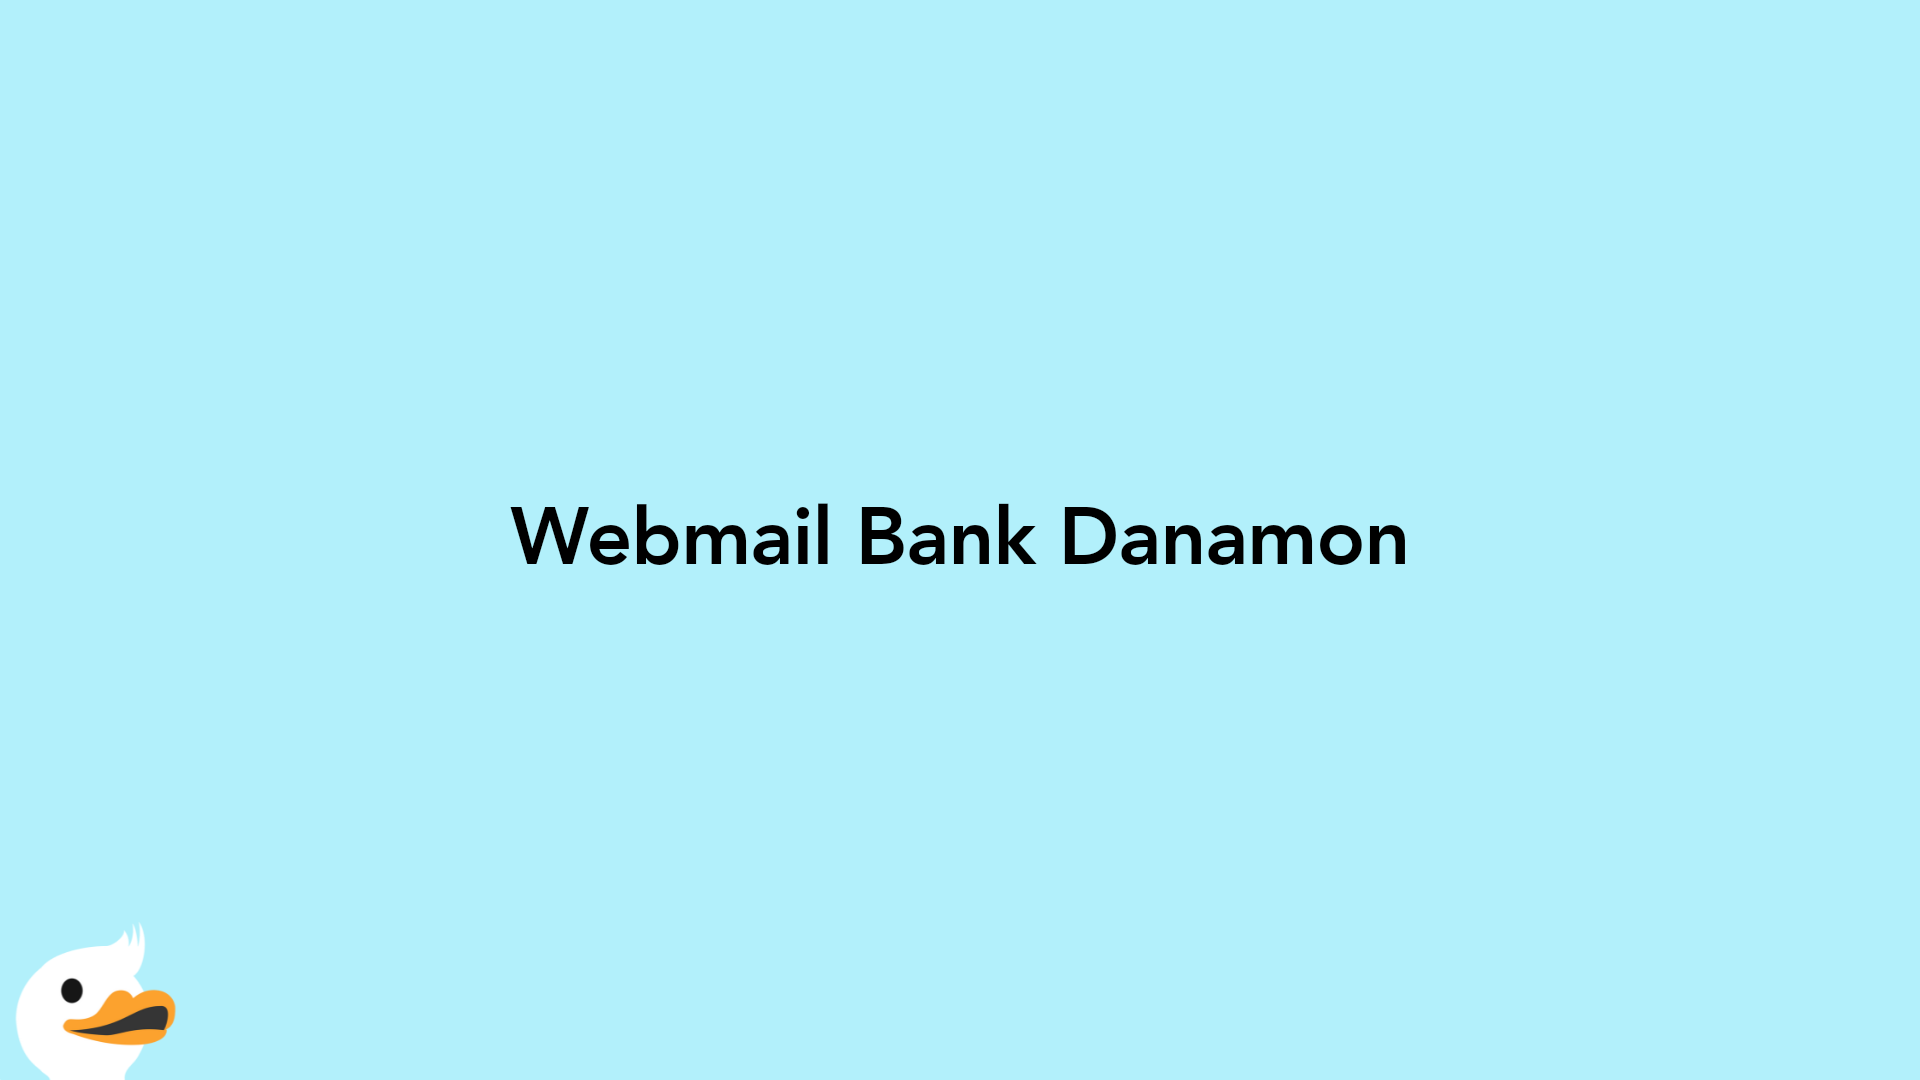 Webmail Bank Danamon